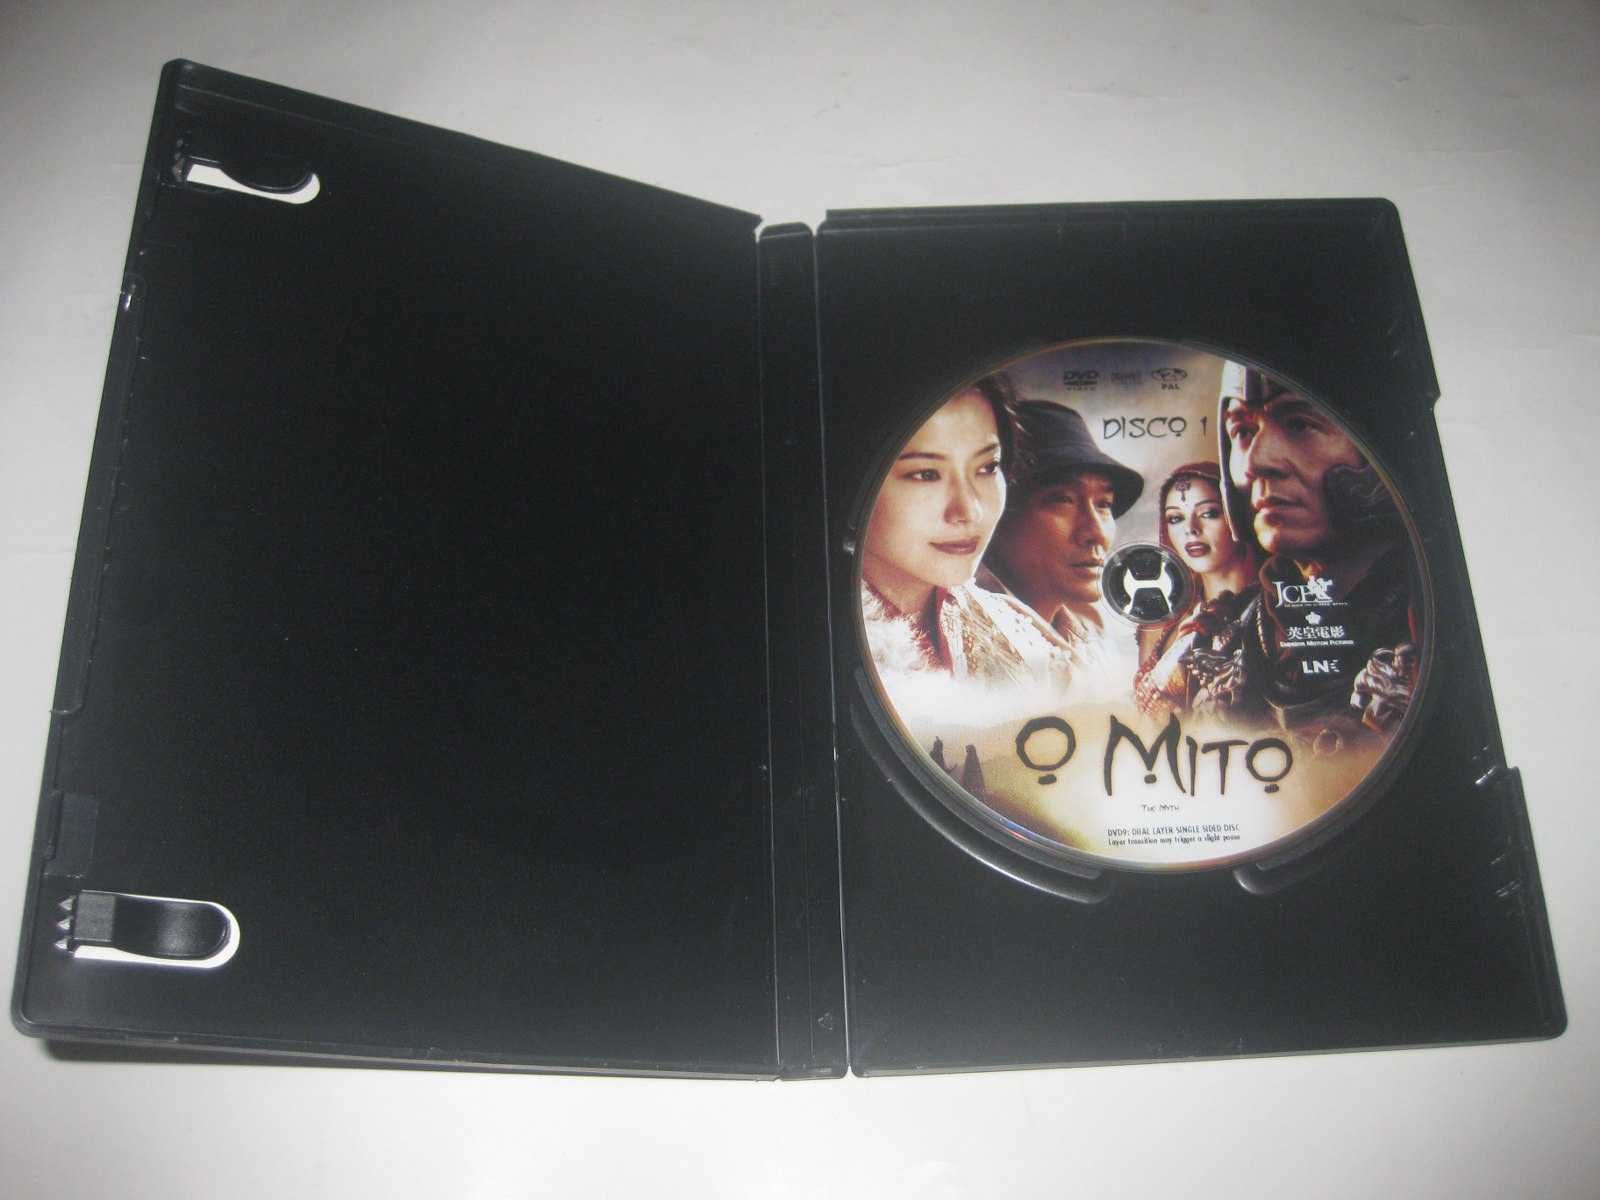 DVD "O Mito" com Jackie Chan